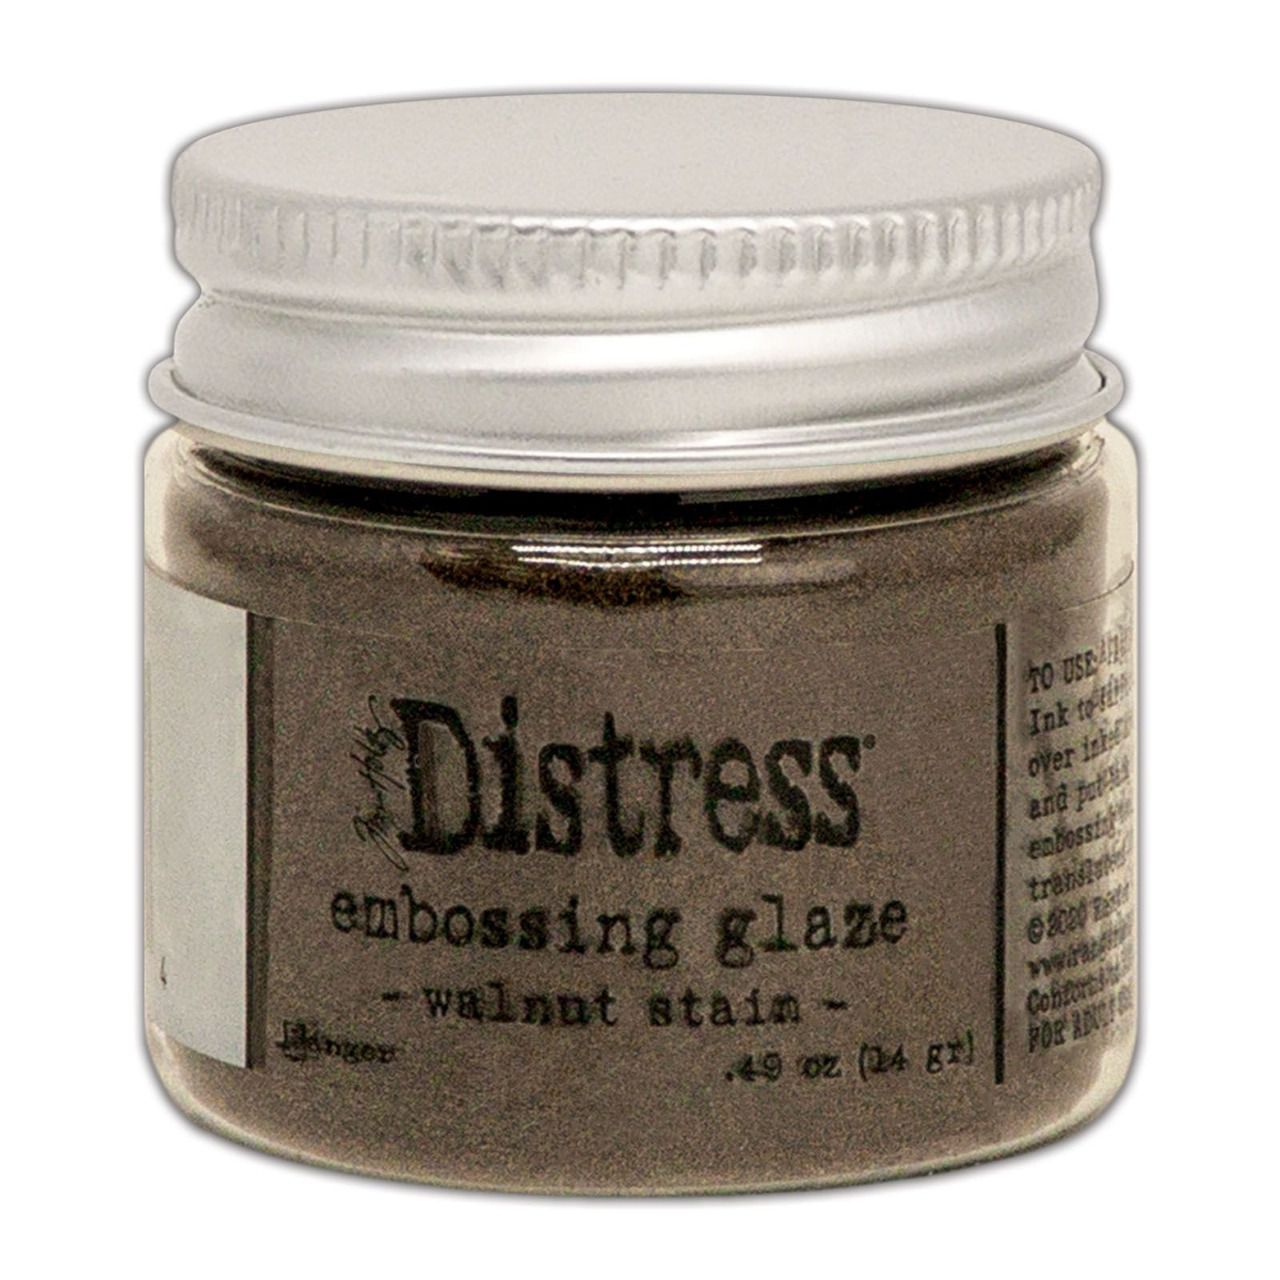 Distress Embossing glaze, Tim Holtz, couleur : Walnut stain